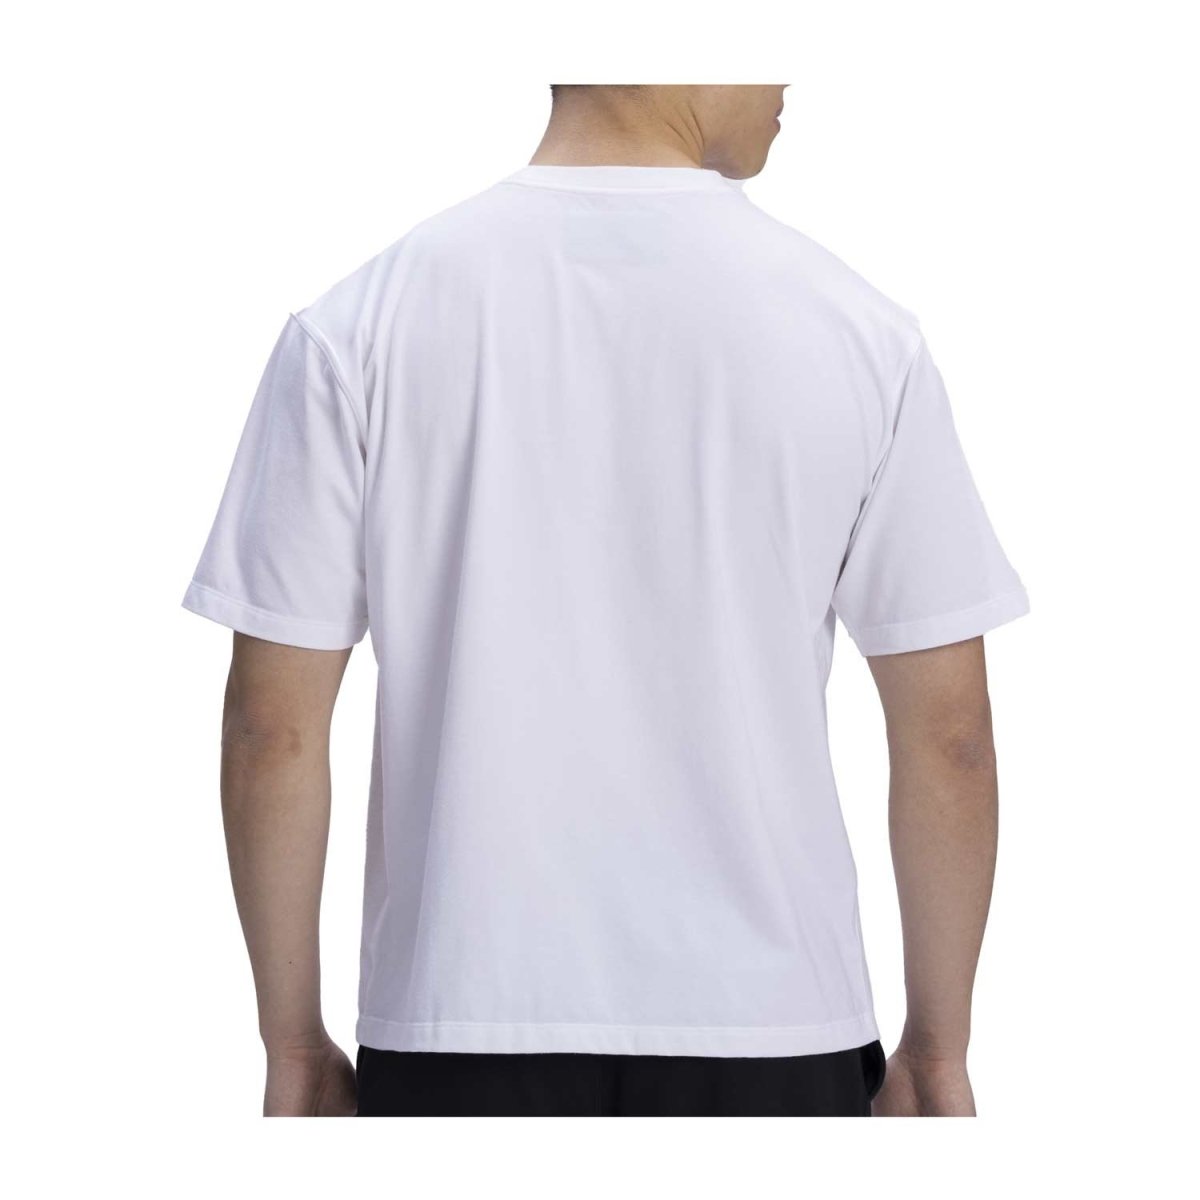 Team Rocket HQ Collection White Oversize T-Shirt - Adult | Pokémon ...